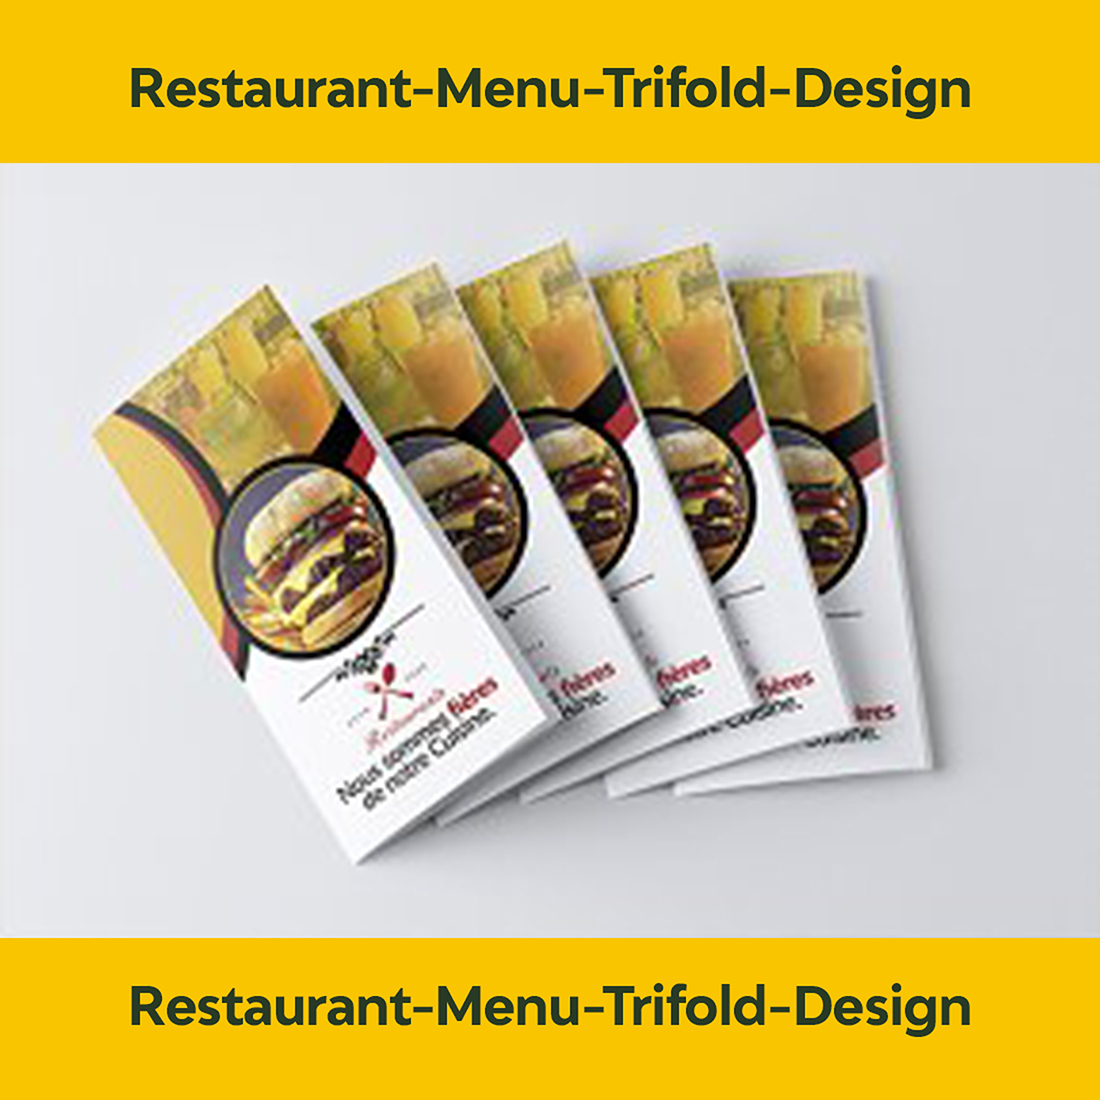 trifold brochure design 2 389